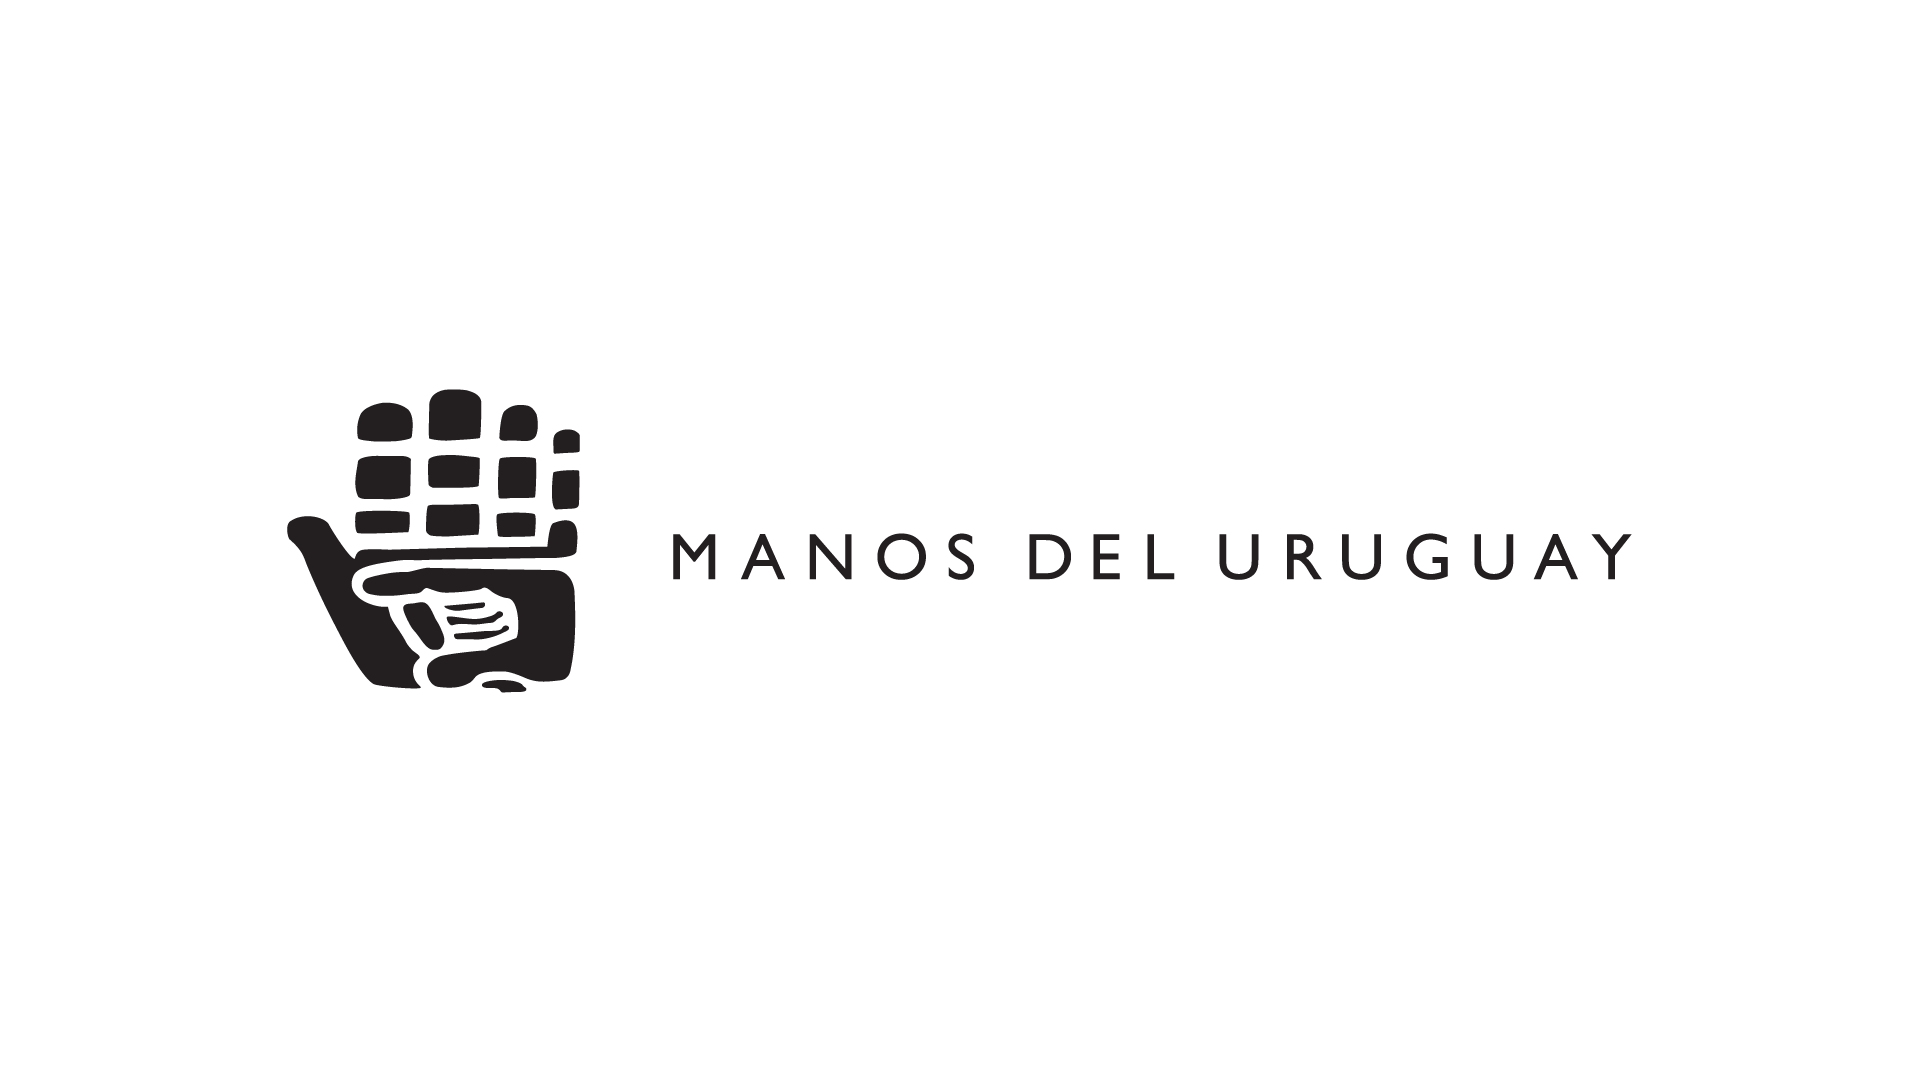 Uruguay Logo - Manos del Uruguay profit social organization